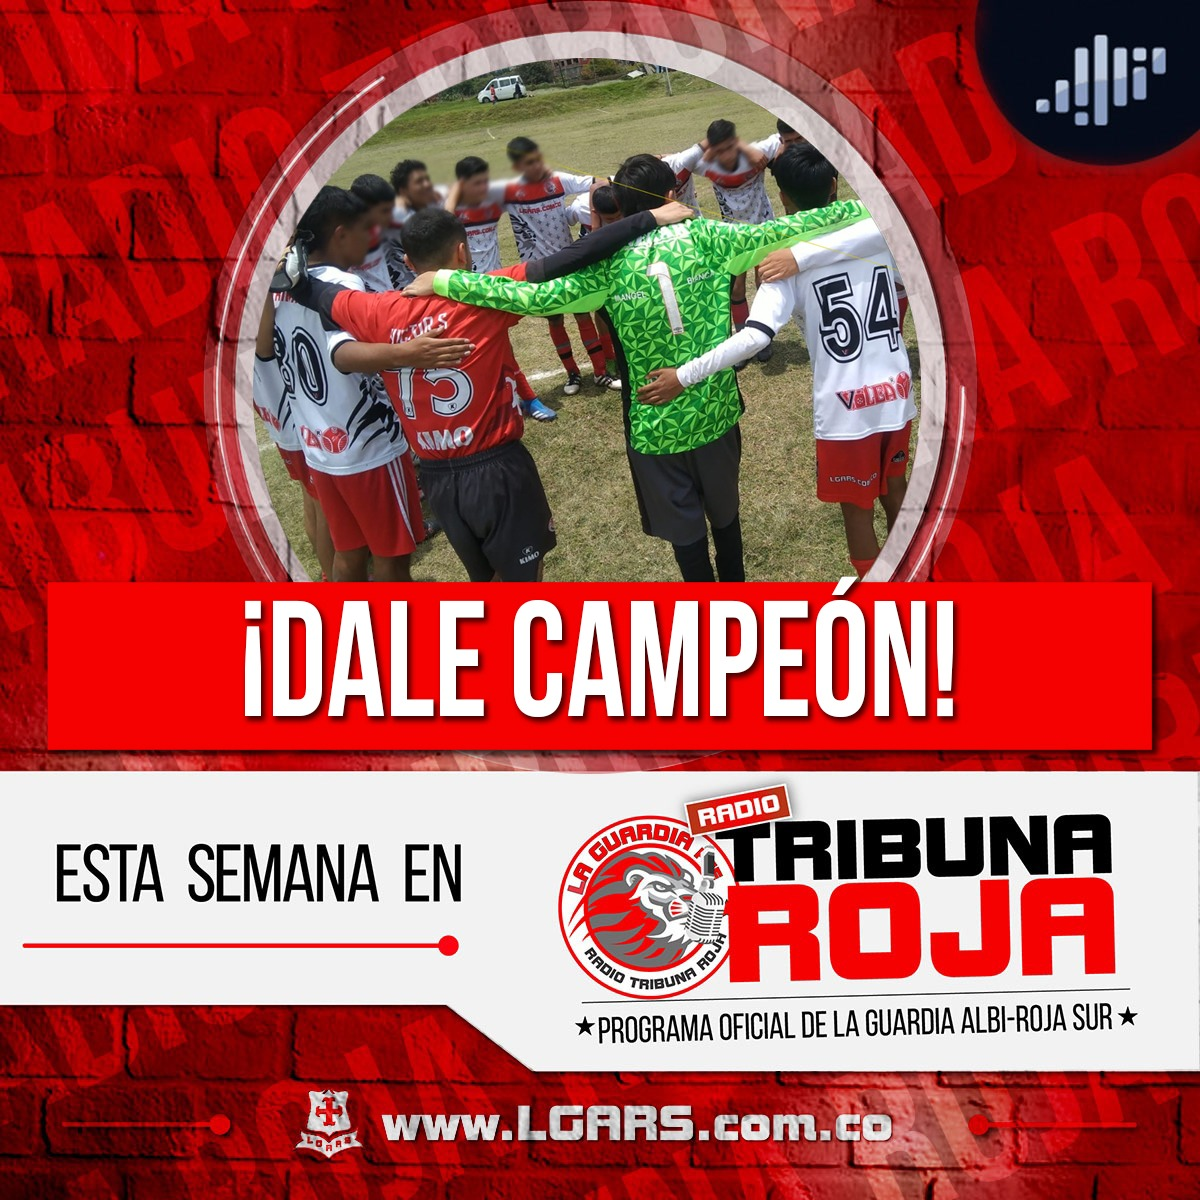 Dale campeón! | Radio Tribuna Roja